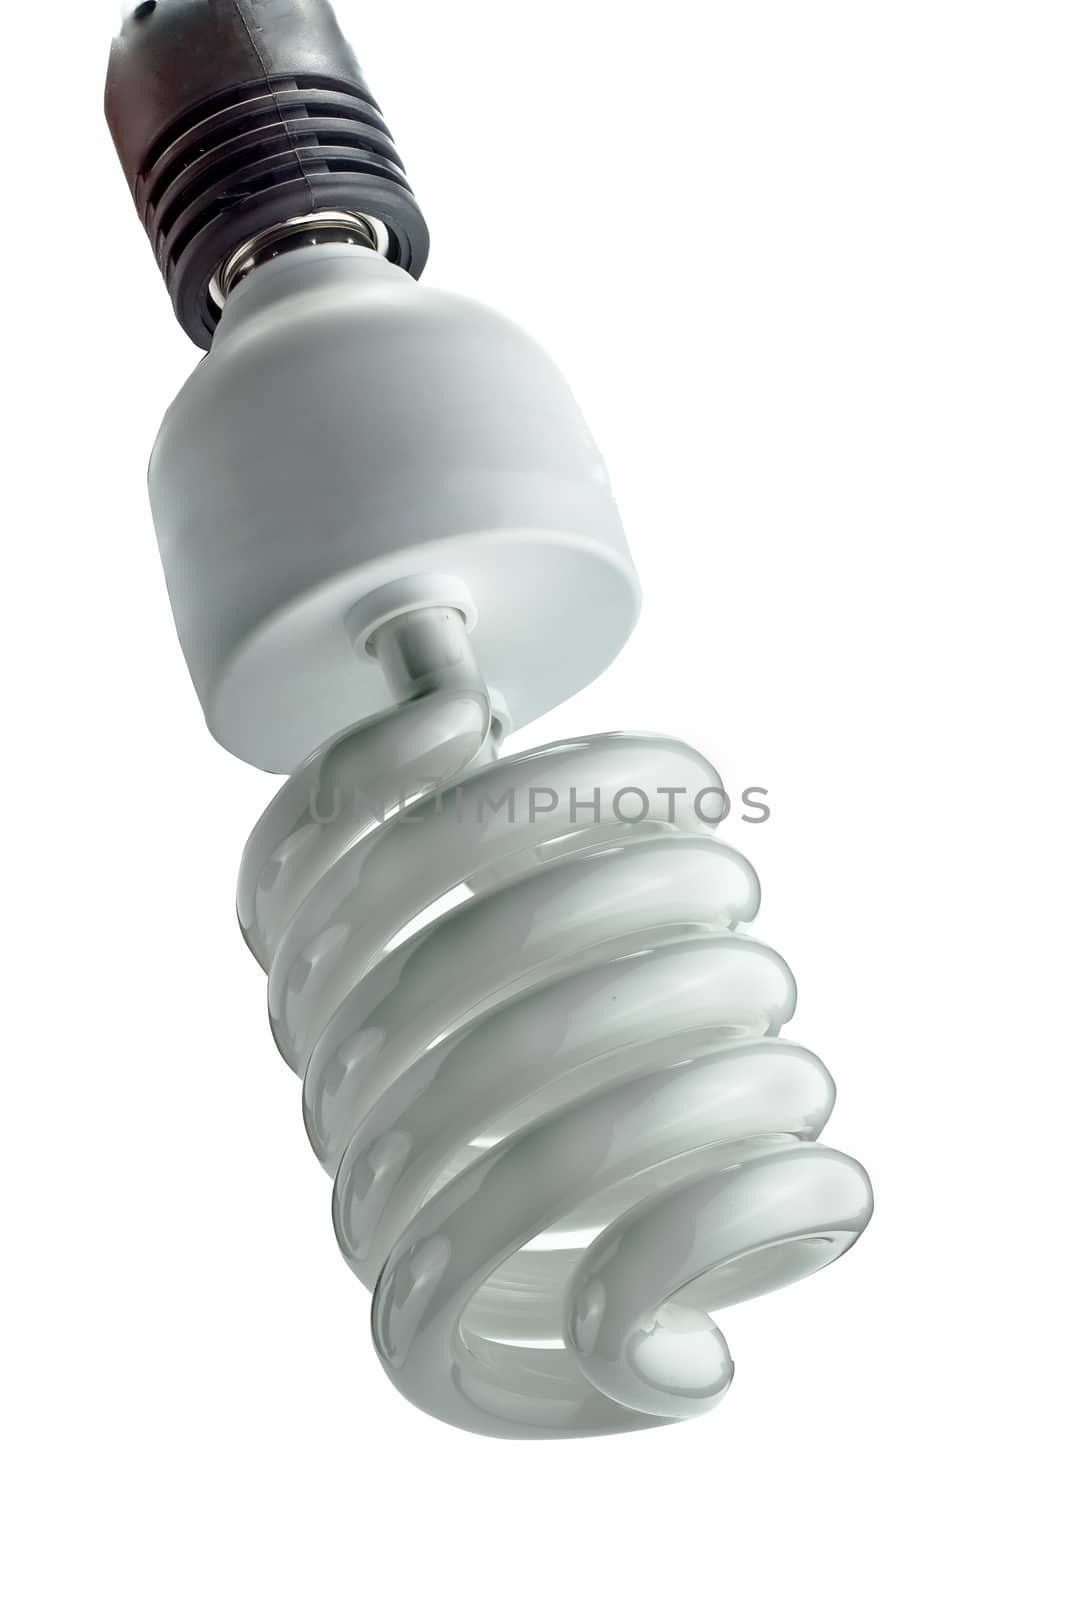 light bulb by ssdblues